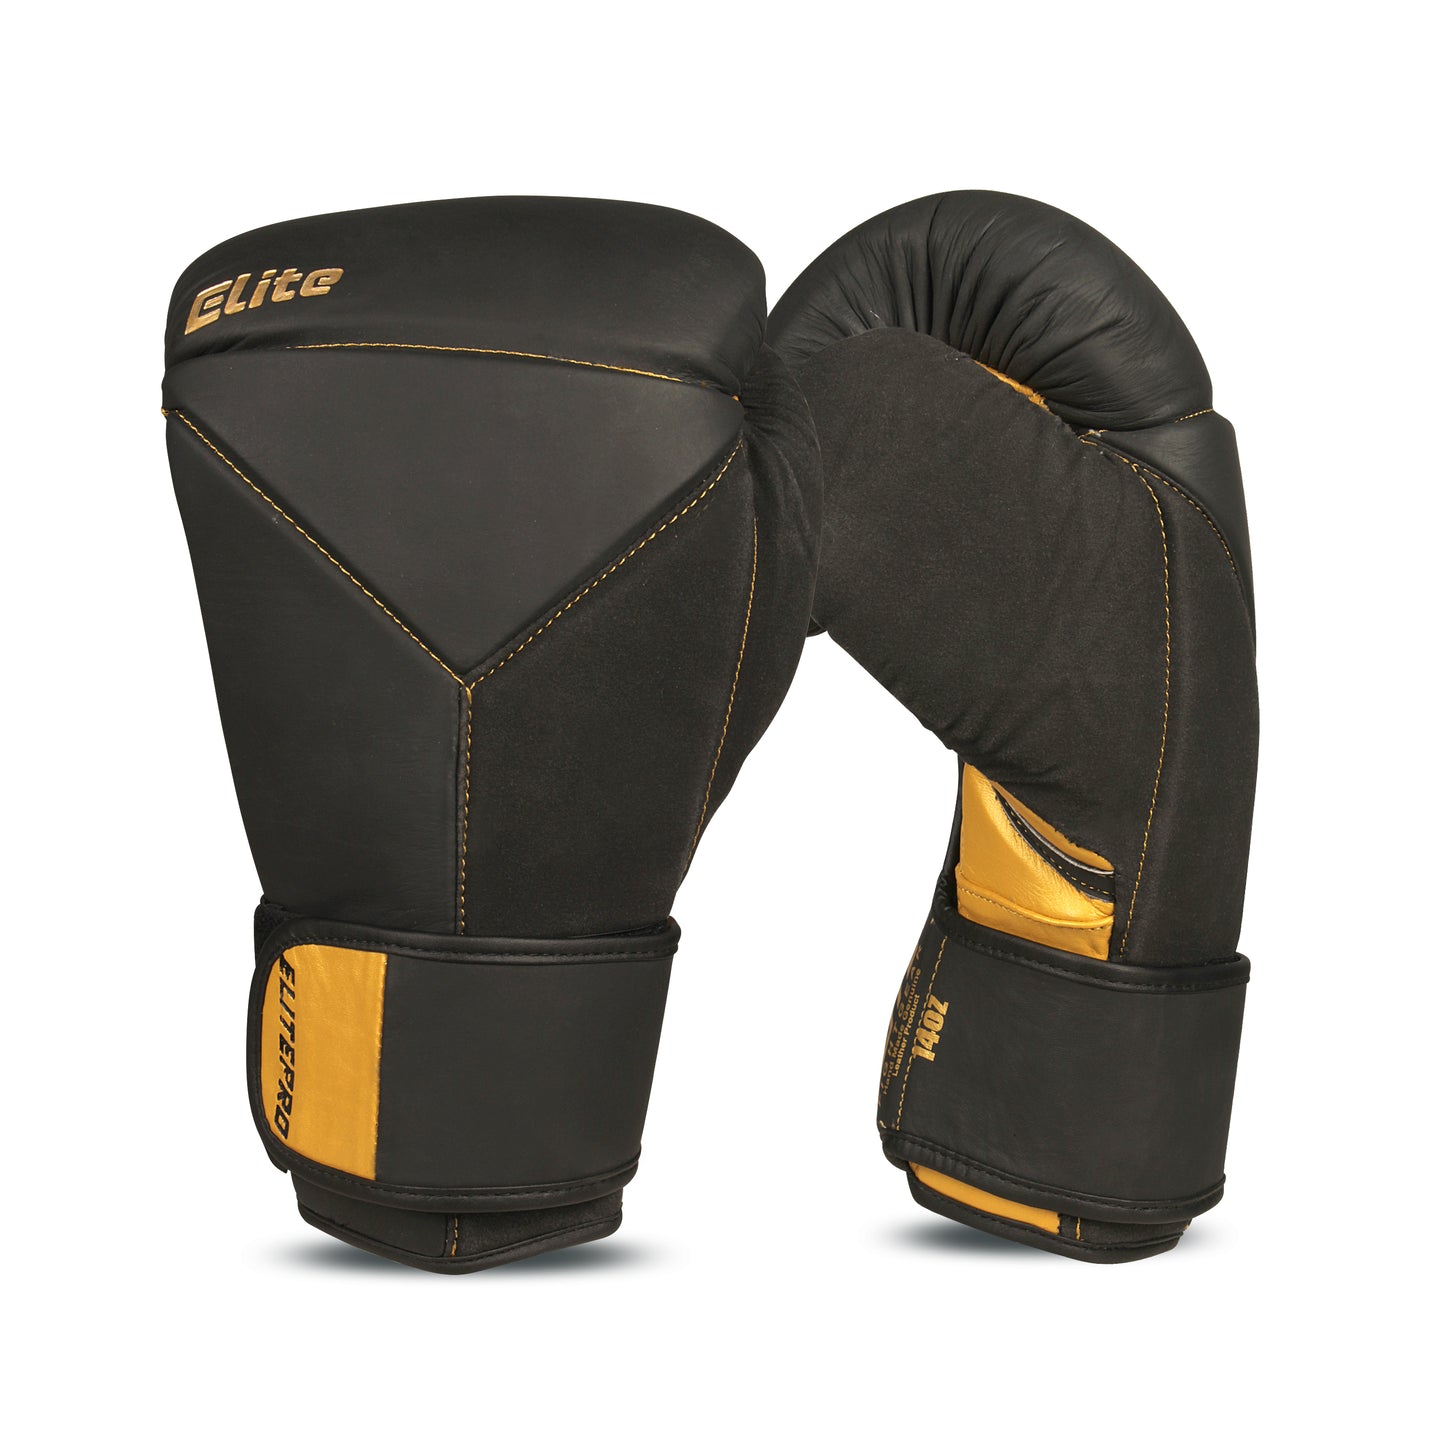 Power Fist 1.0 Boxing Gloves Black/Gold